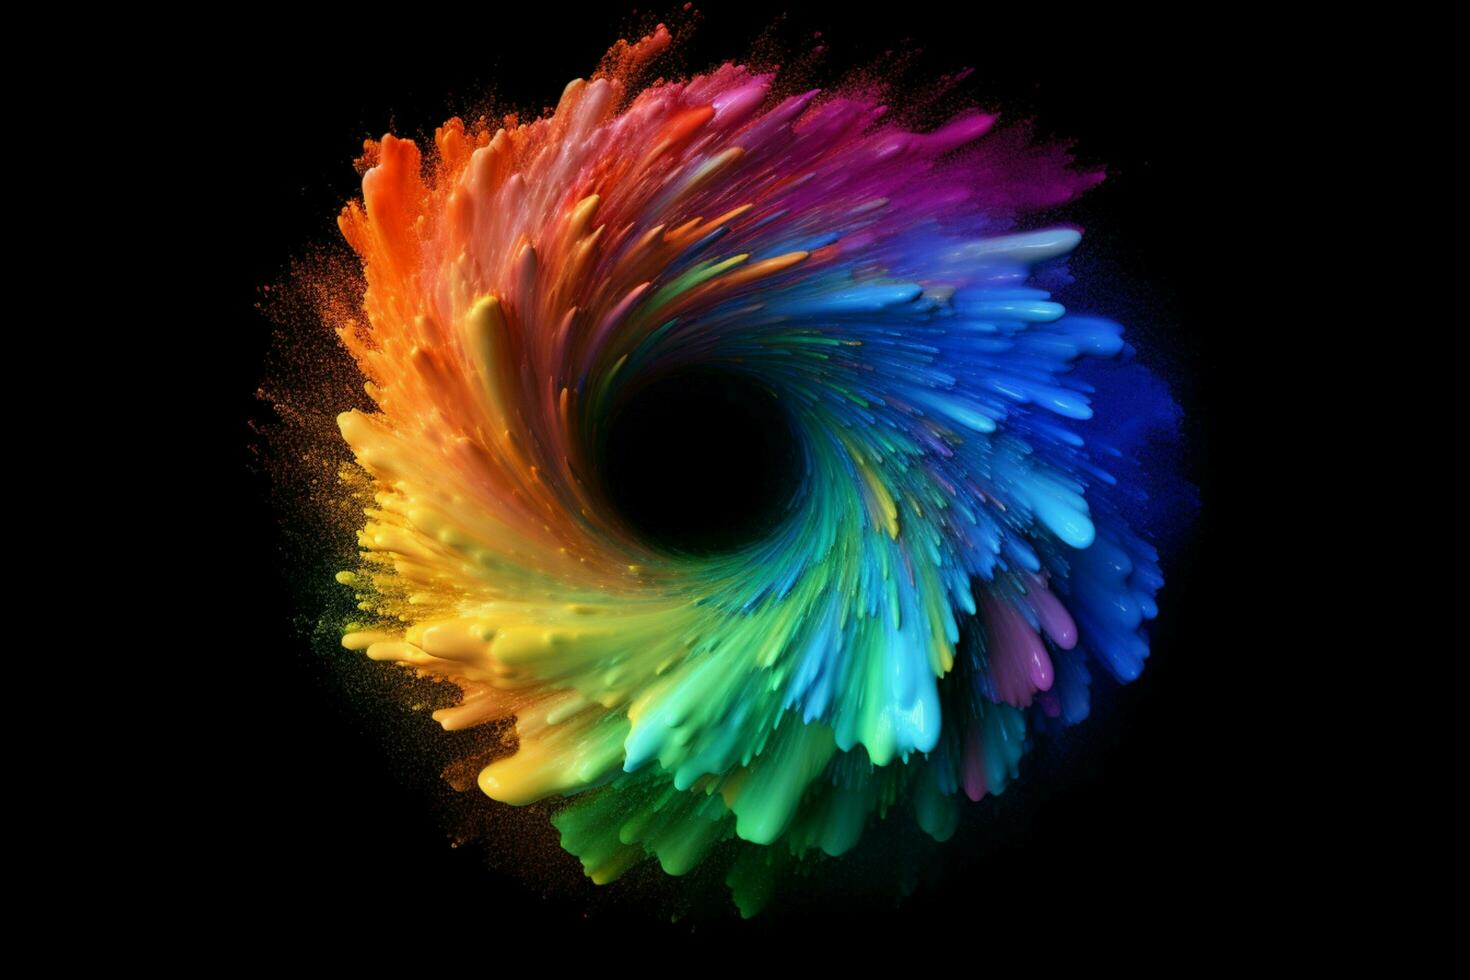 a colorful paint rainbow isolated on black illust photo